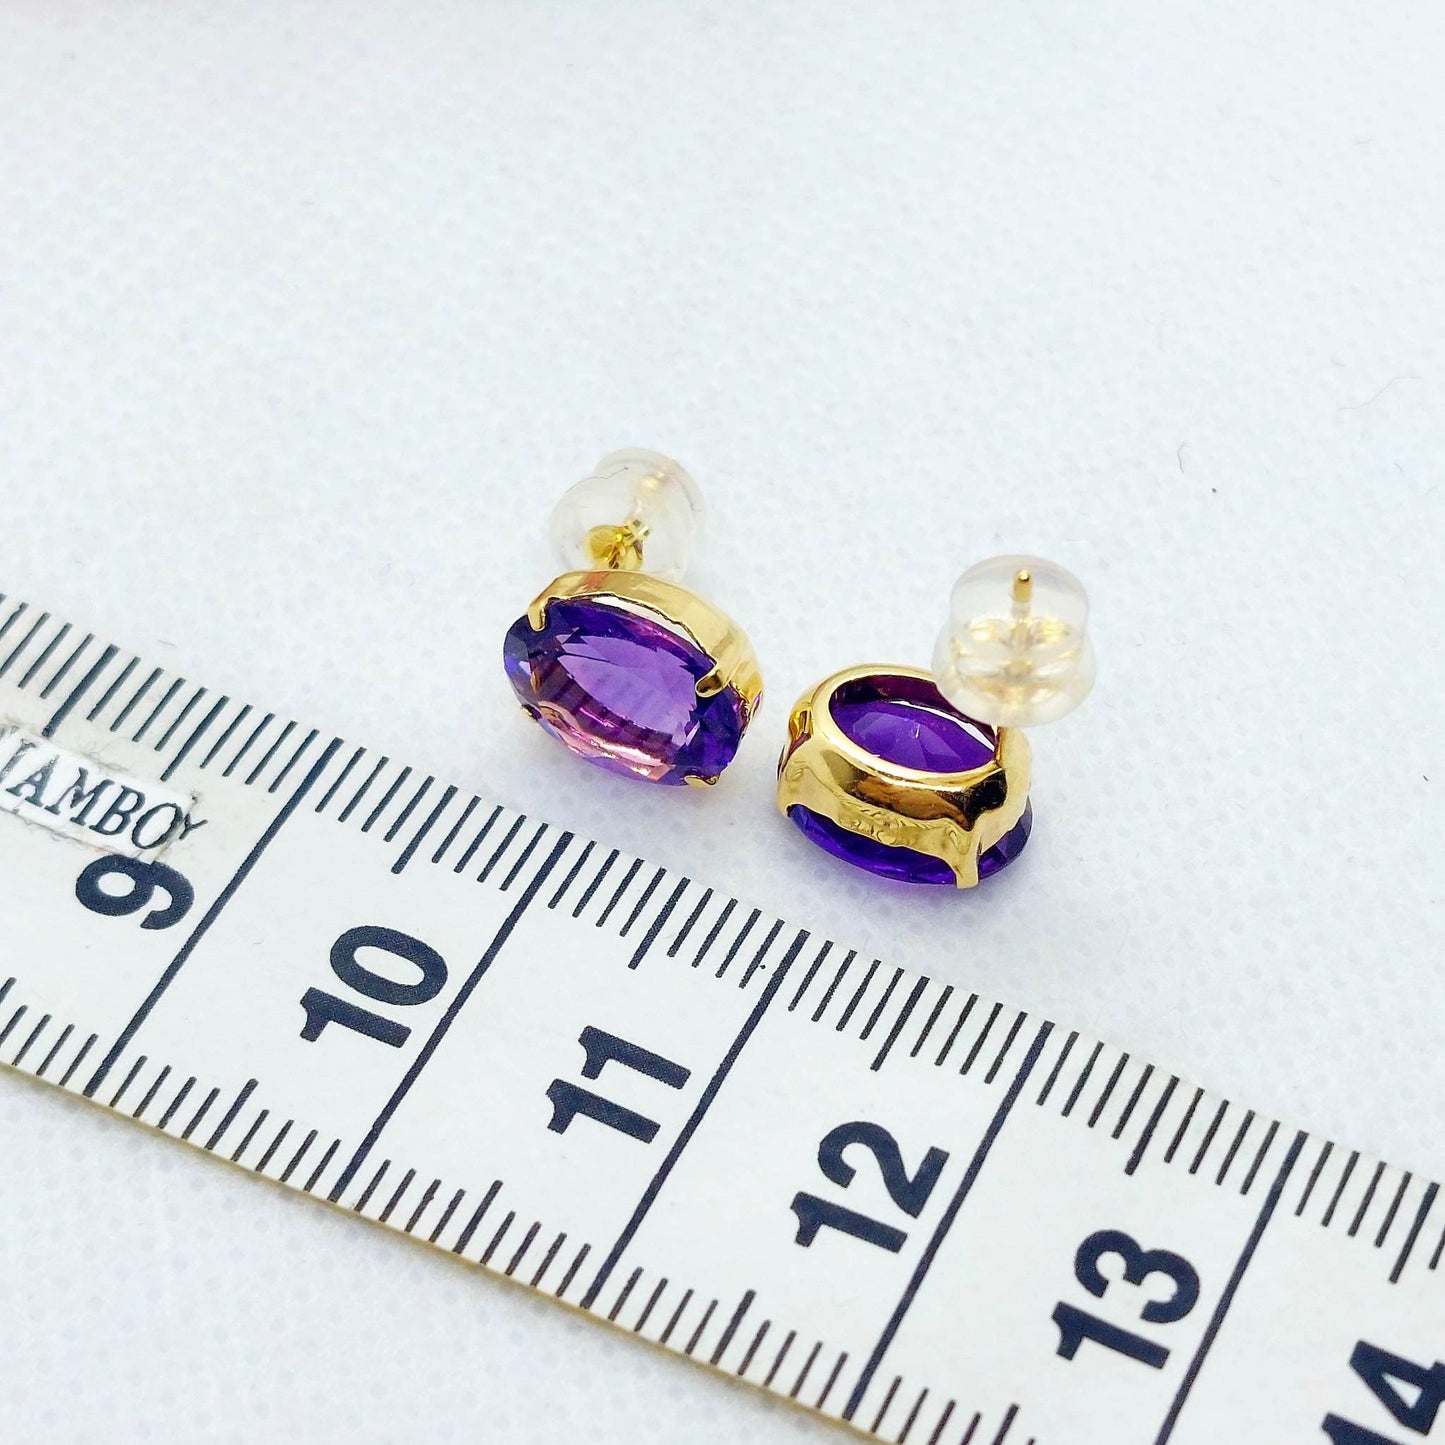 Natural Amethyst Stud Earrings in Solid 18K Gold Made in Japan